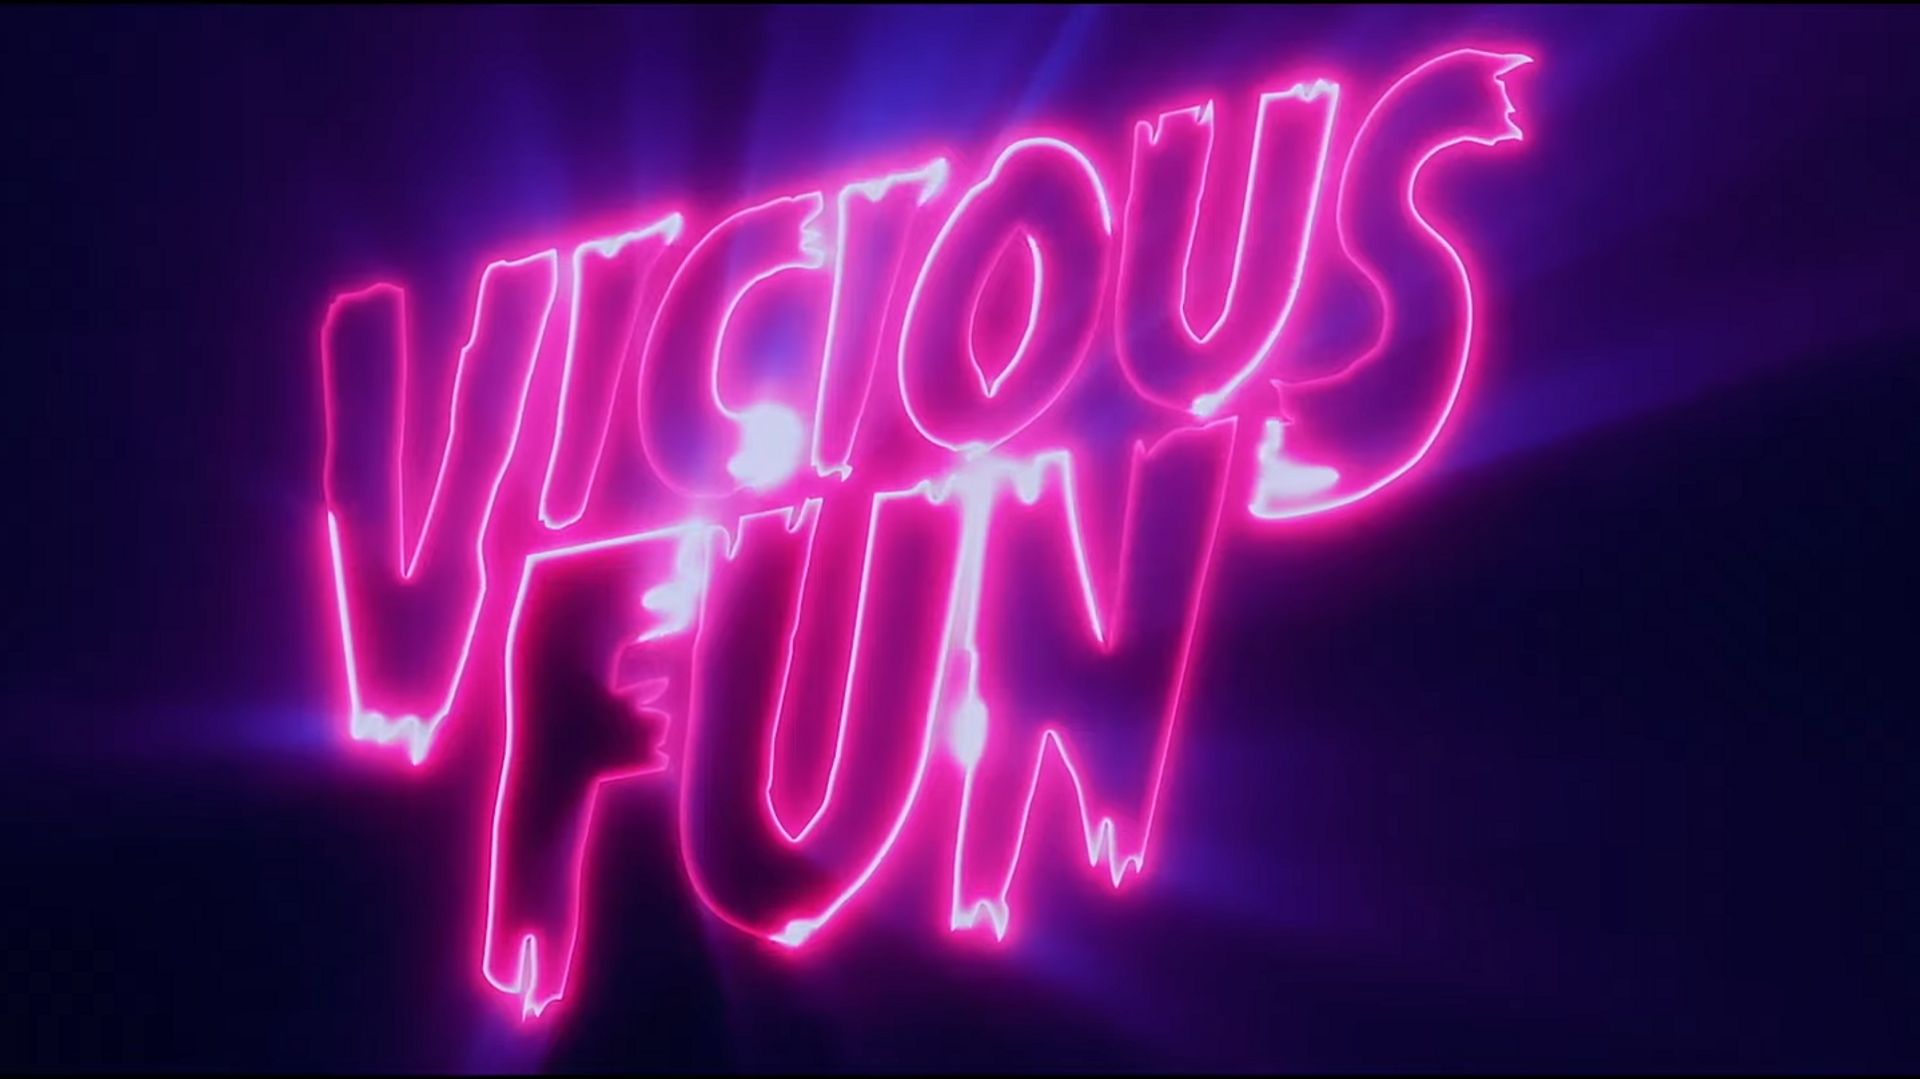 "Vicious Fun" de Cody Calahan remporte le Grand Prix du BIFFF